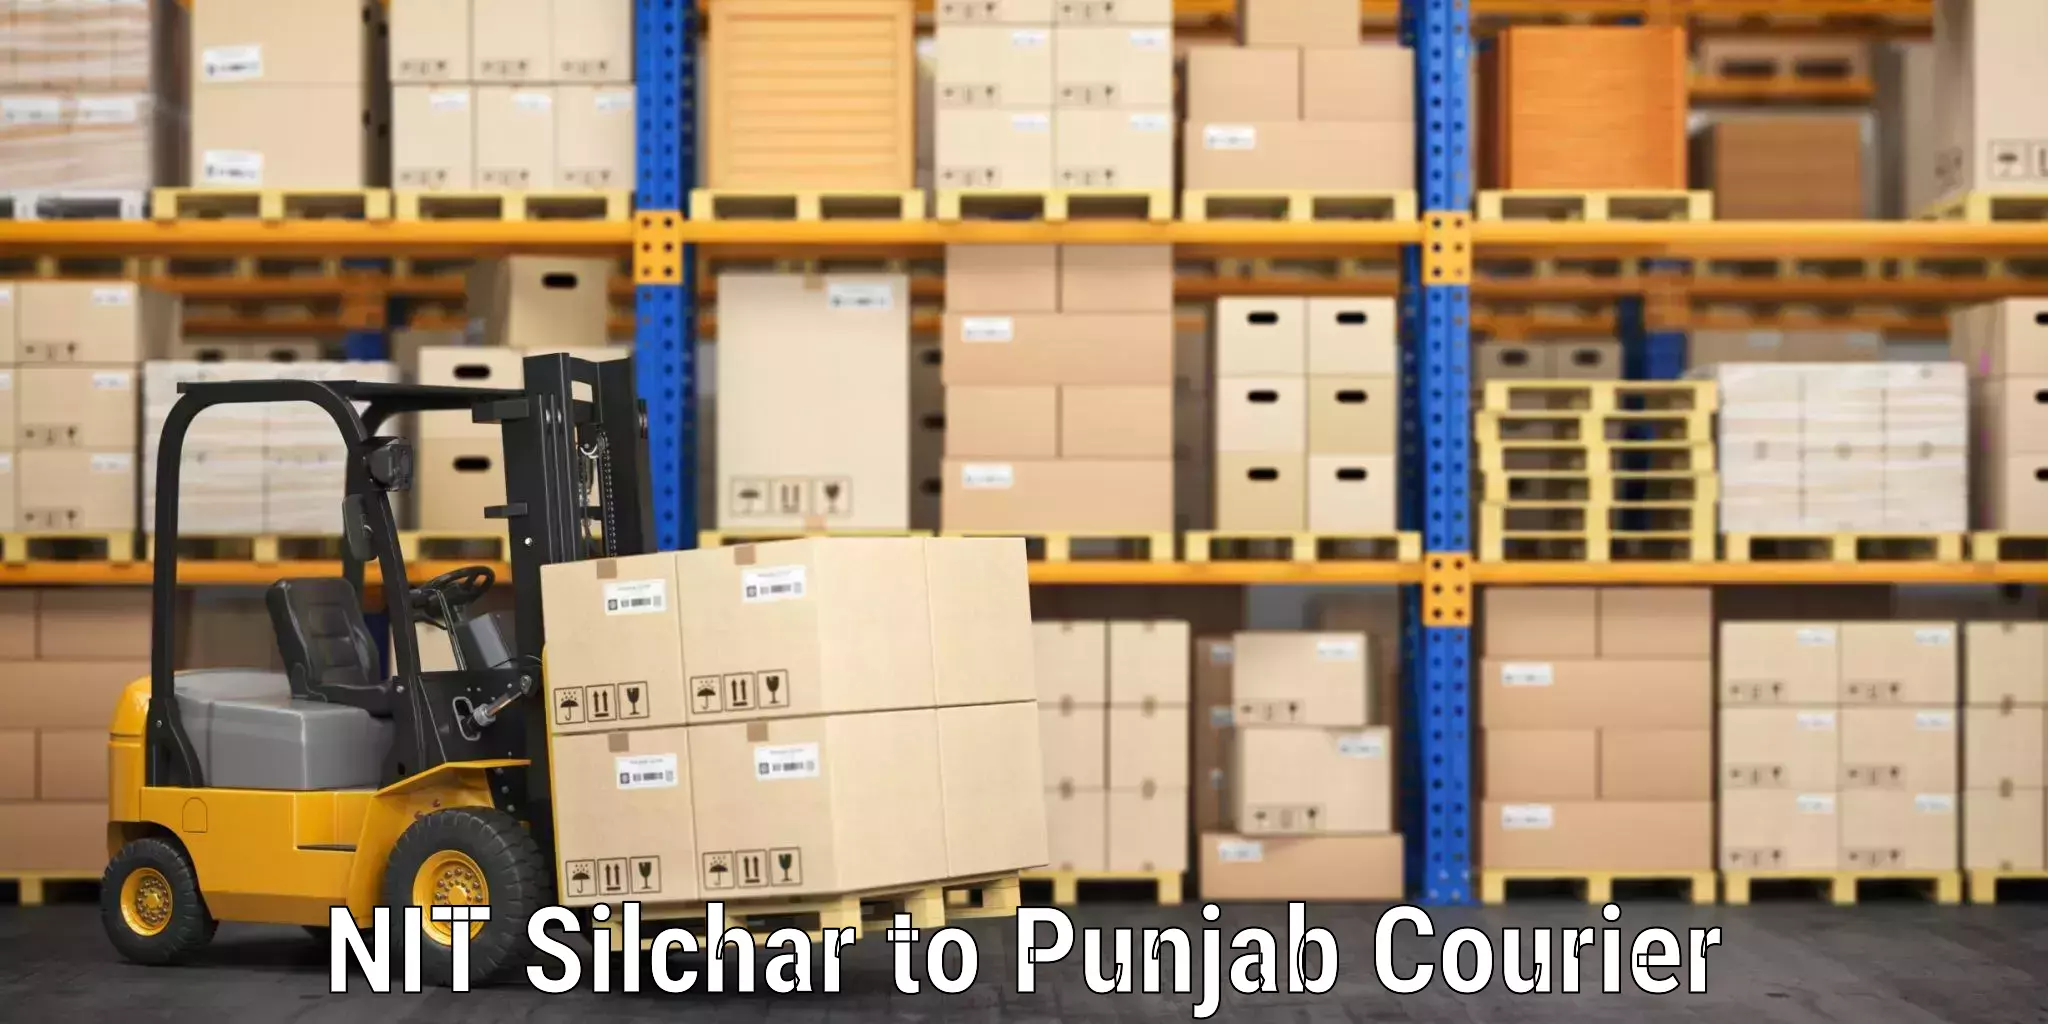 Luggage transport company NIT Silchar to Ludhiana